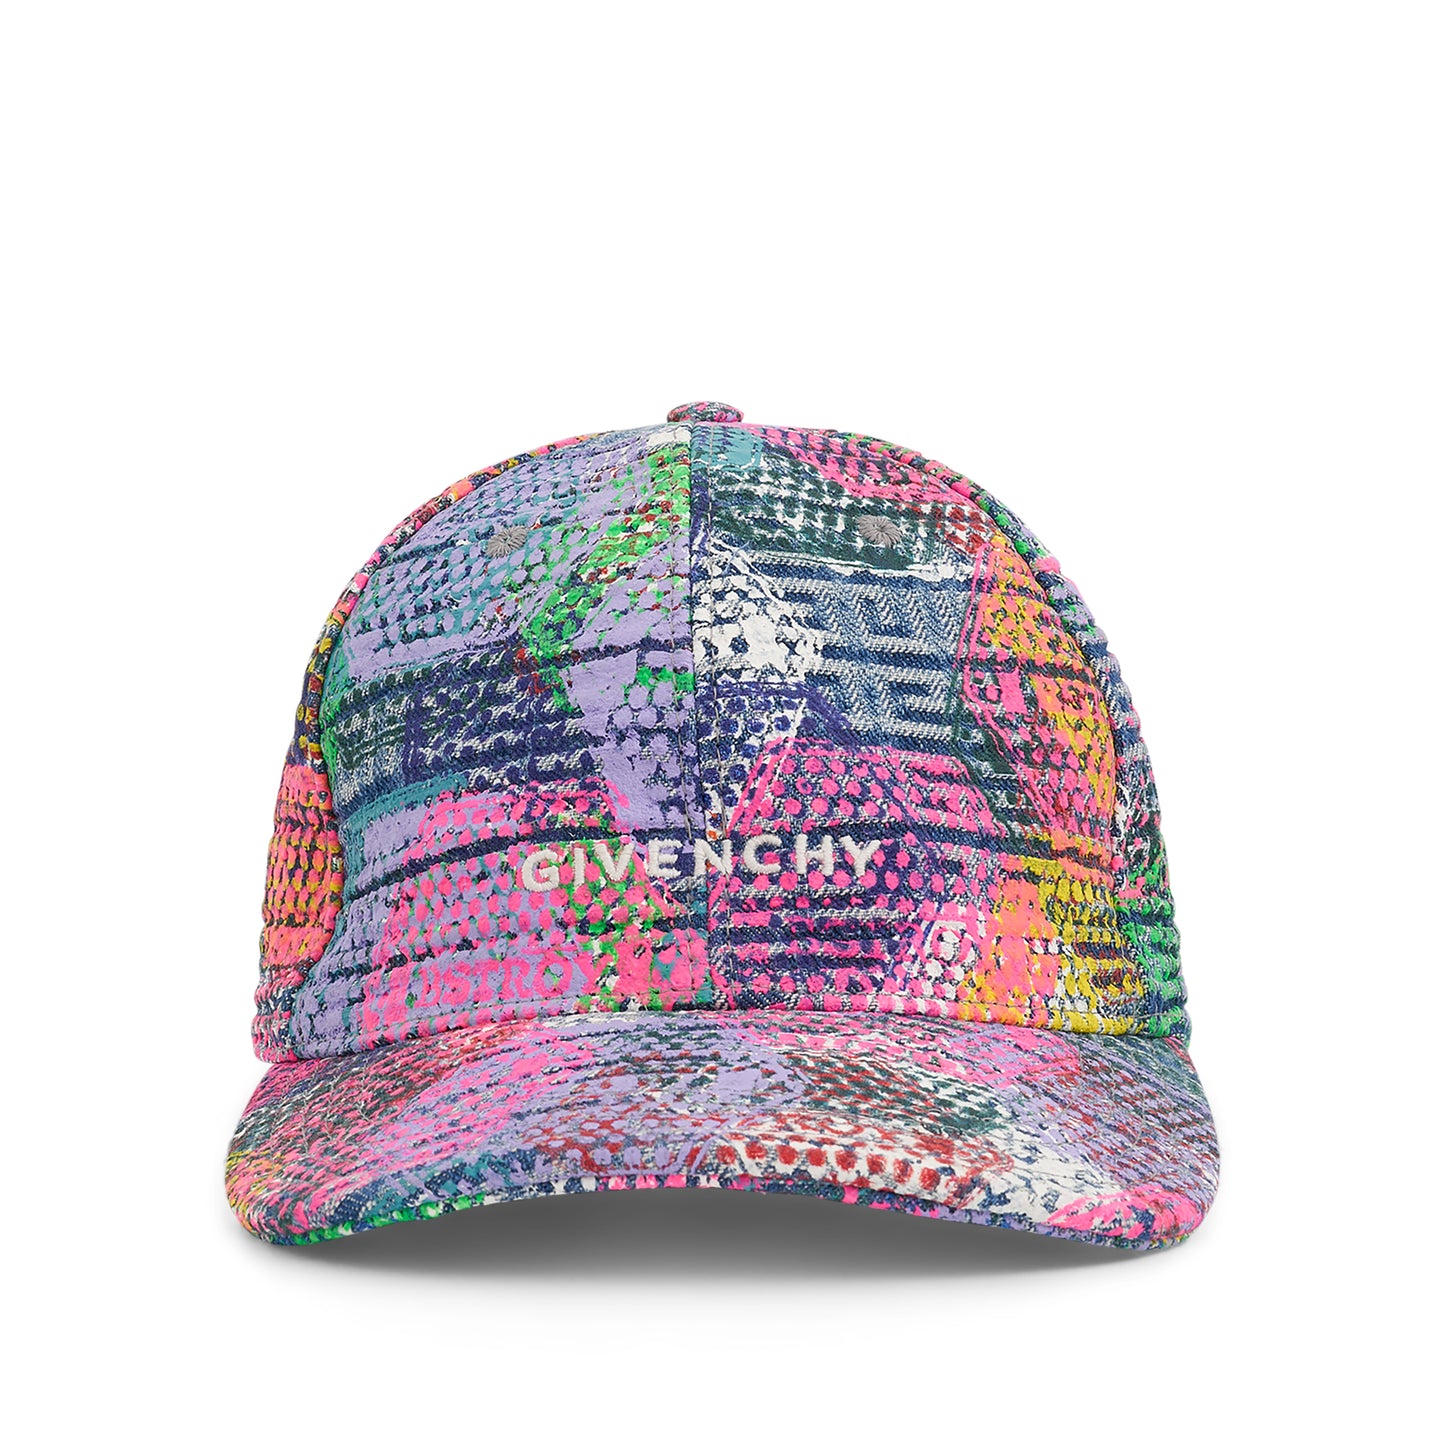 BSTROY Denim Hexagon Print Curved Cap in Multicolour